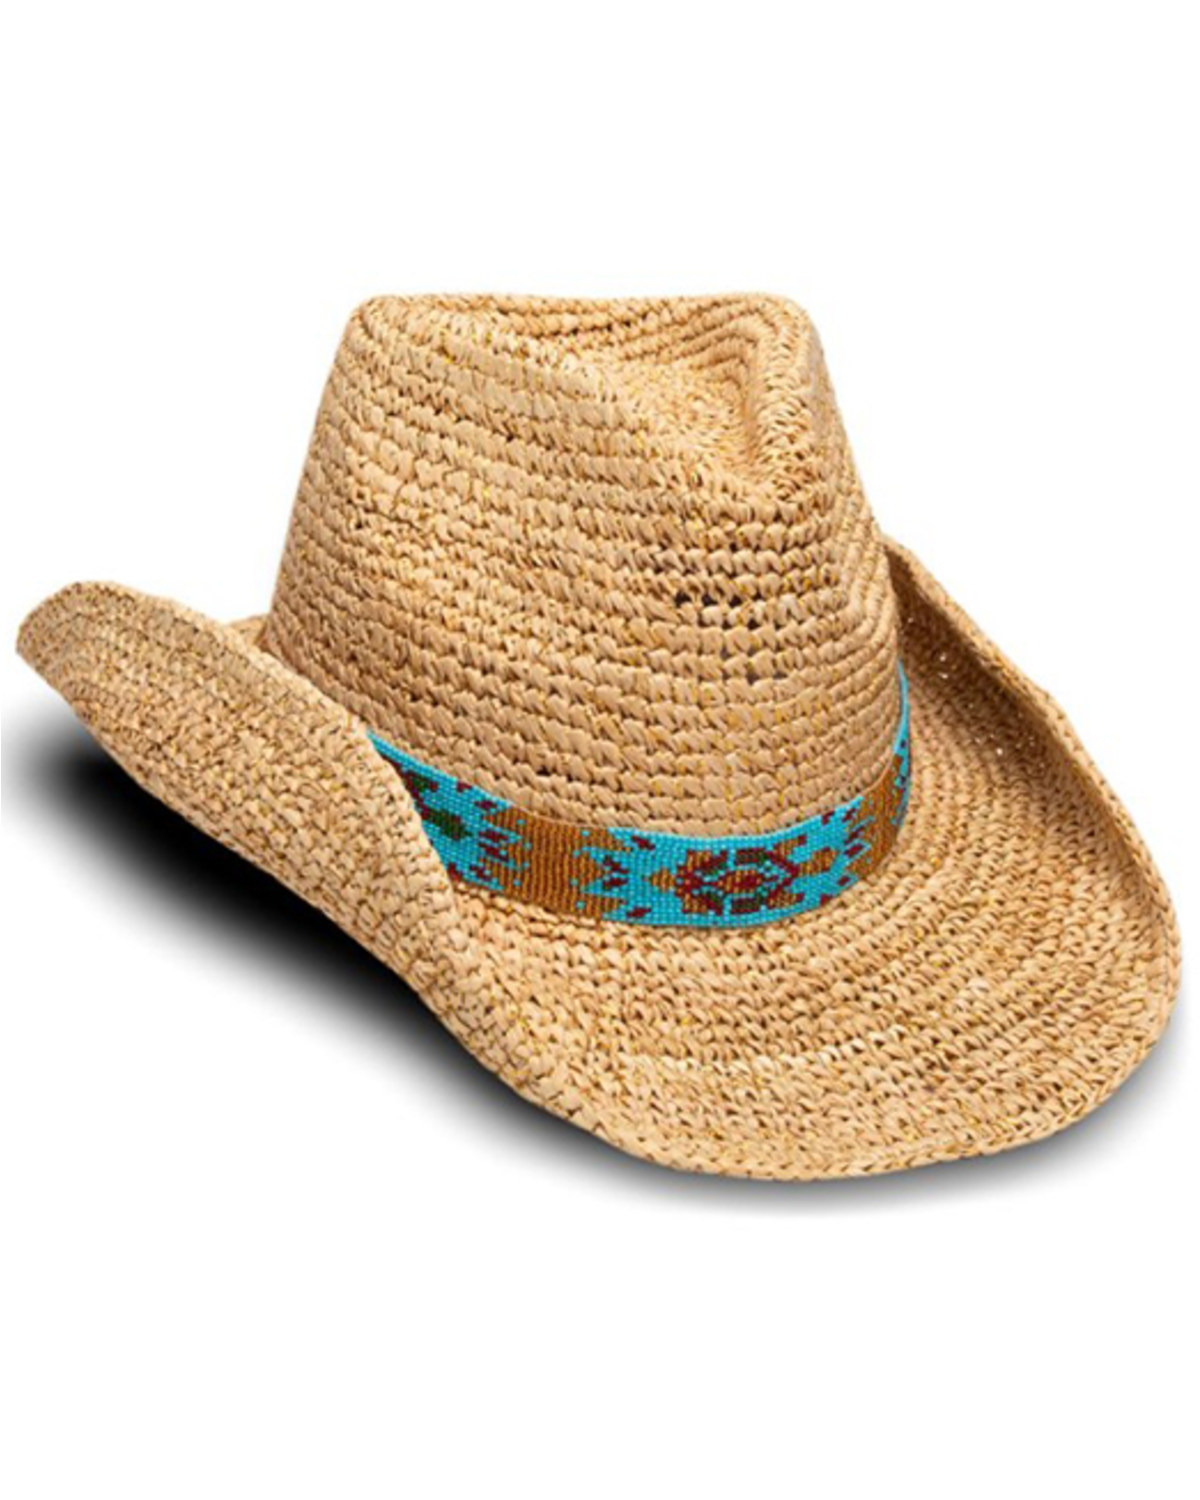 Nikki Beach Women's Mazatlan Straw Cowboy Hat